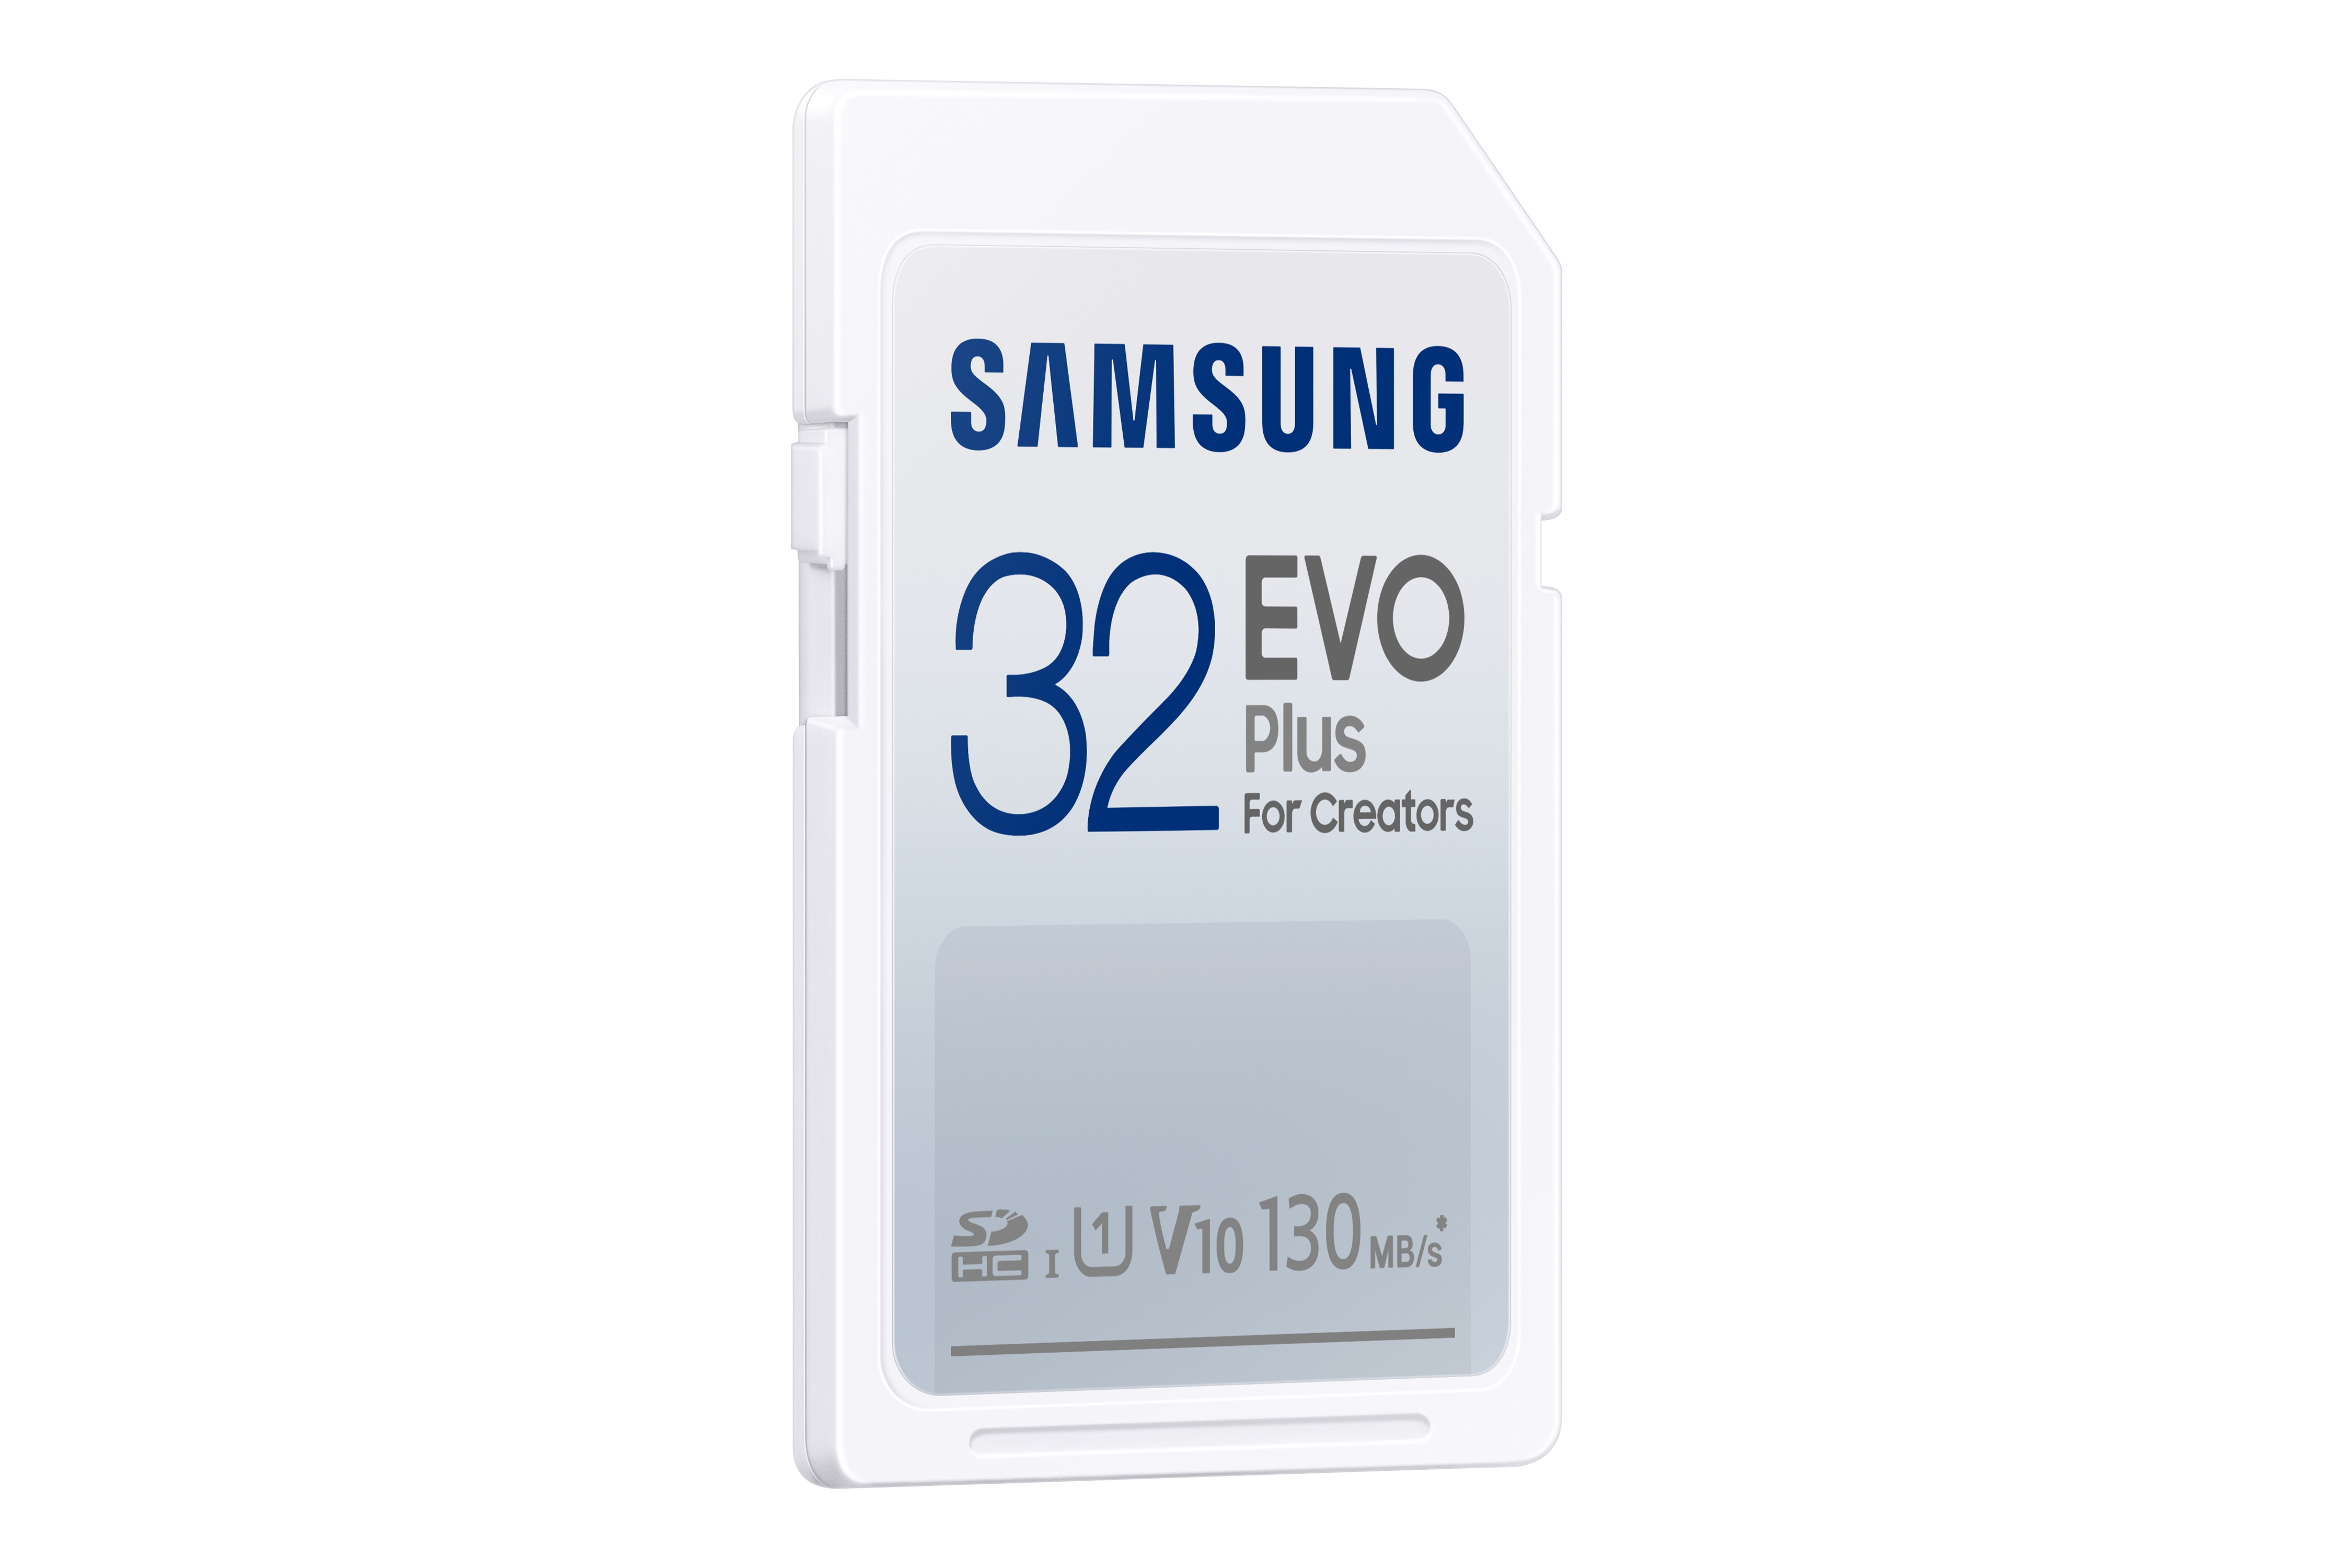 Thumbnail image of EVO Plus Full-Size SDHC Card 32GB